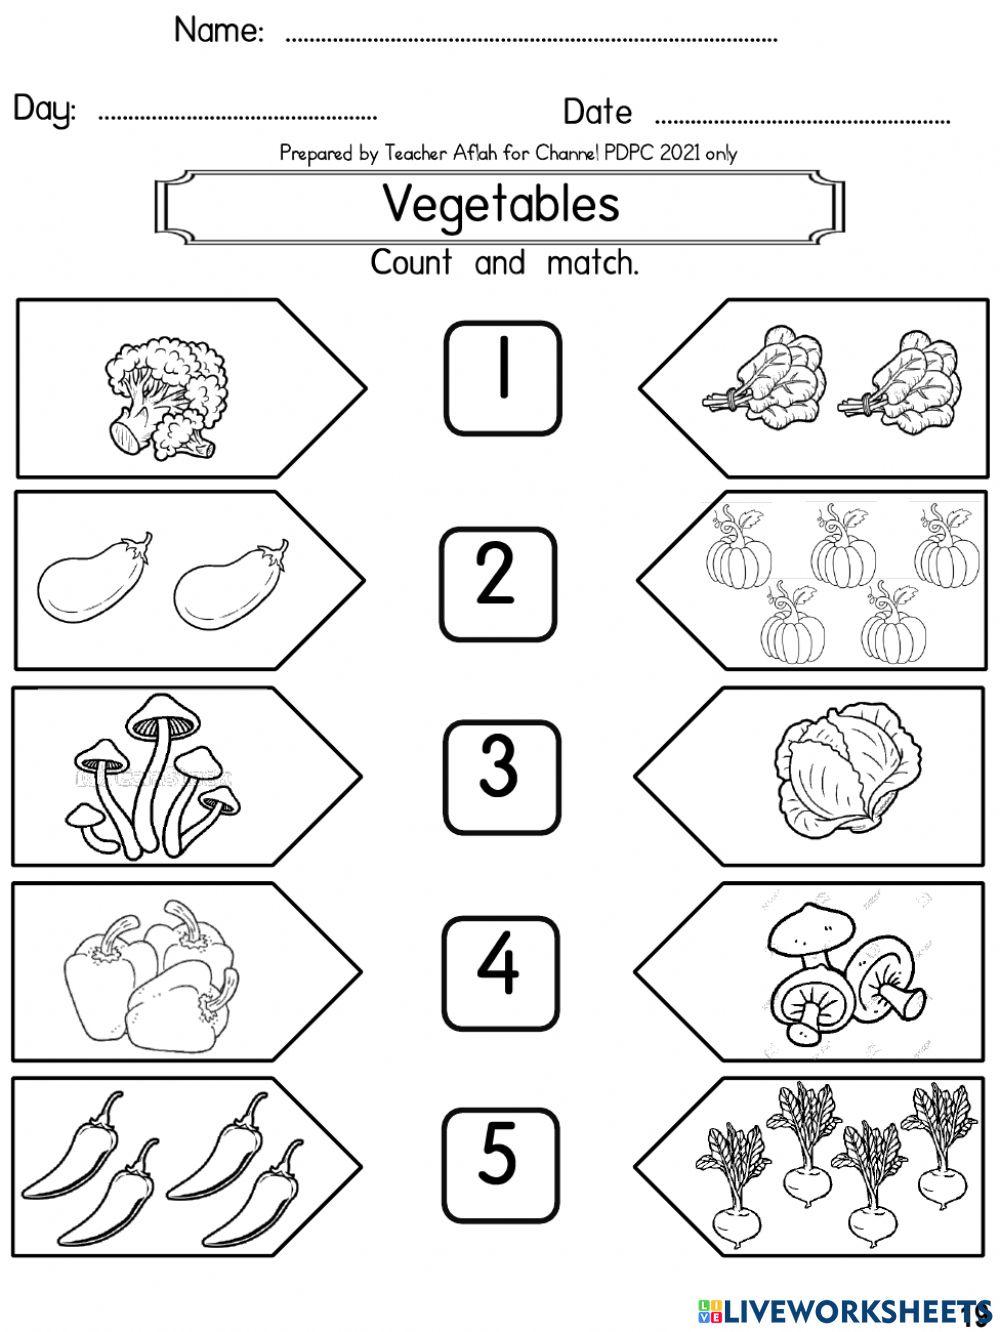 Sayur (vegetables)